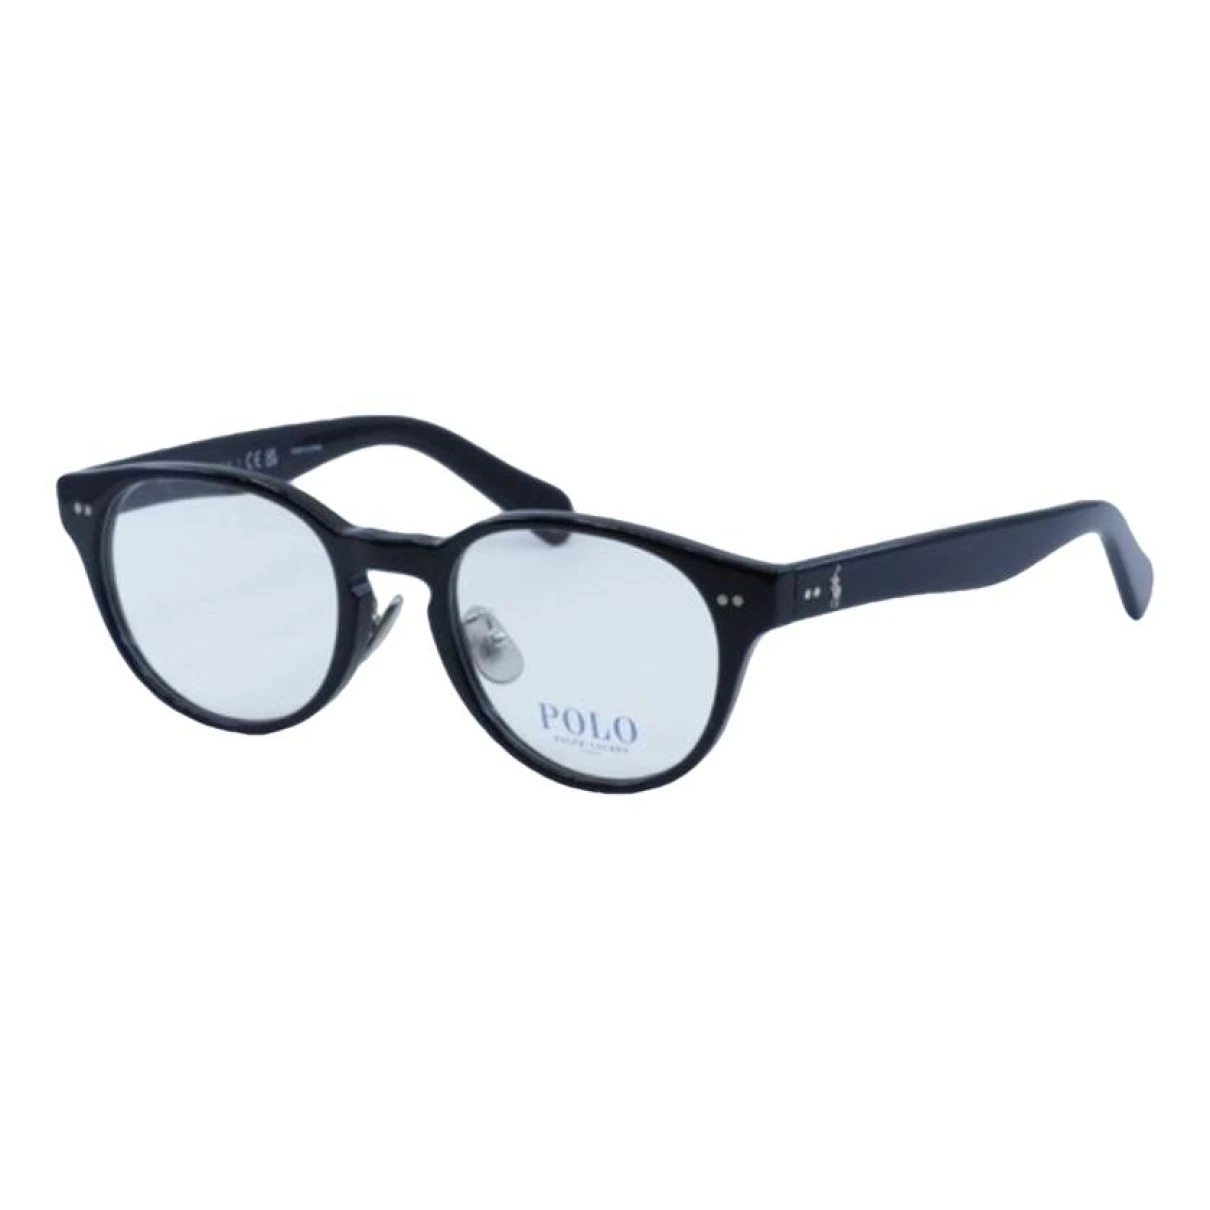 Pre-owned Ralph Lauren Sunglasses In Black